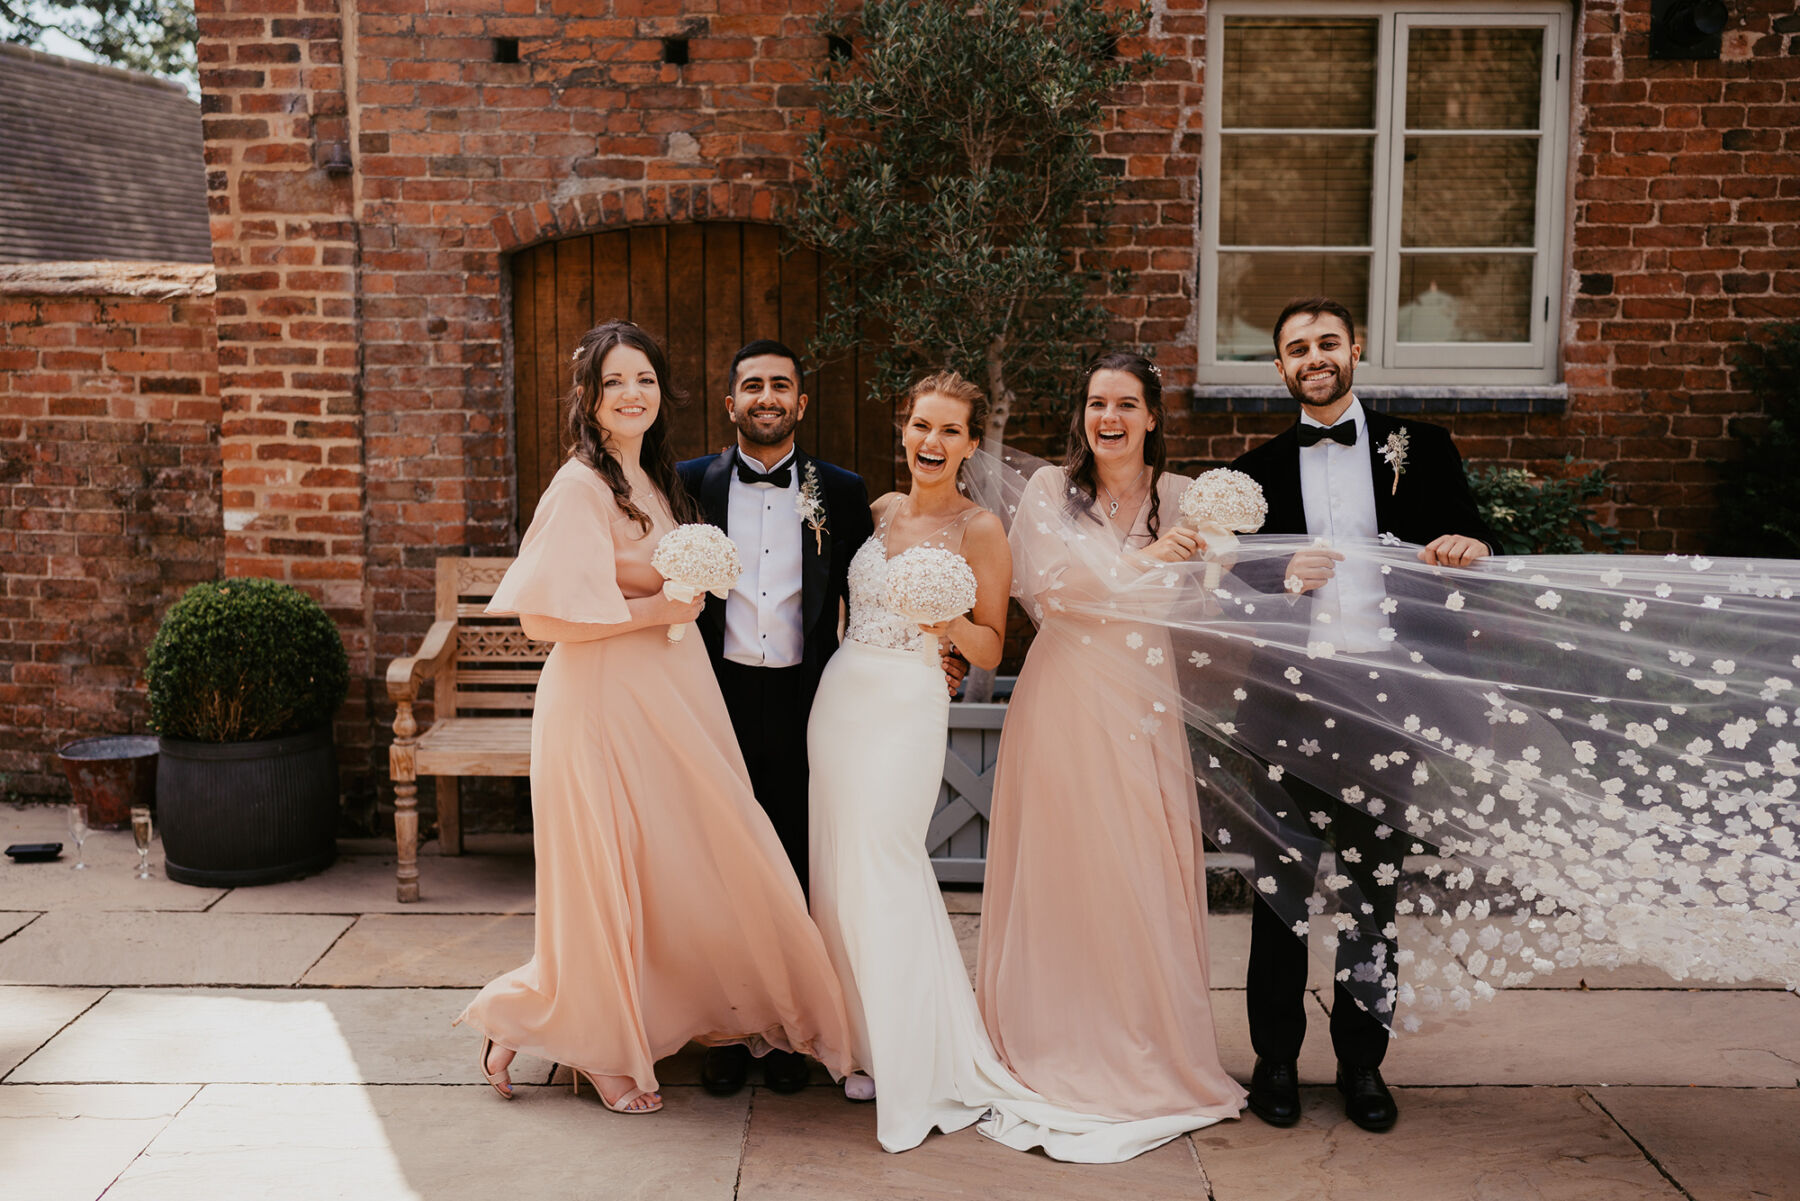 Bridesmaids in peach dresses, groom in tuxedo, bride in a long flyaway wedding veil.